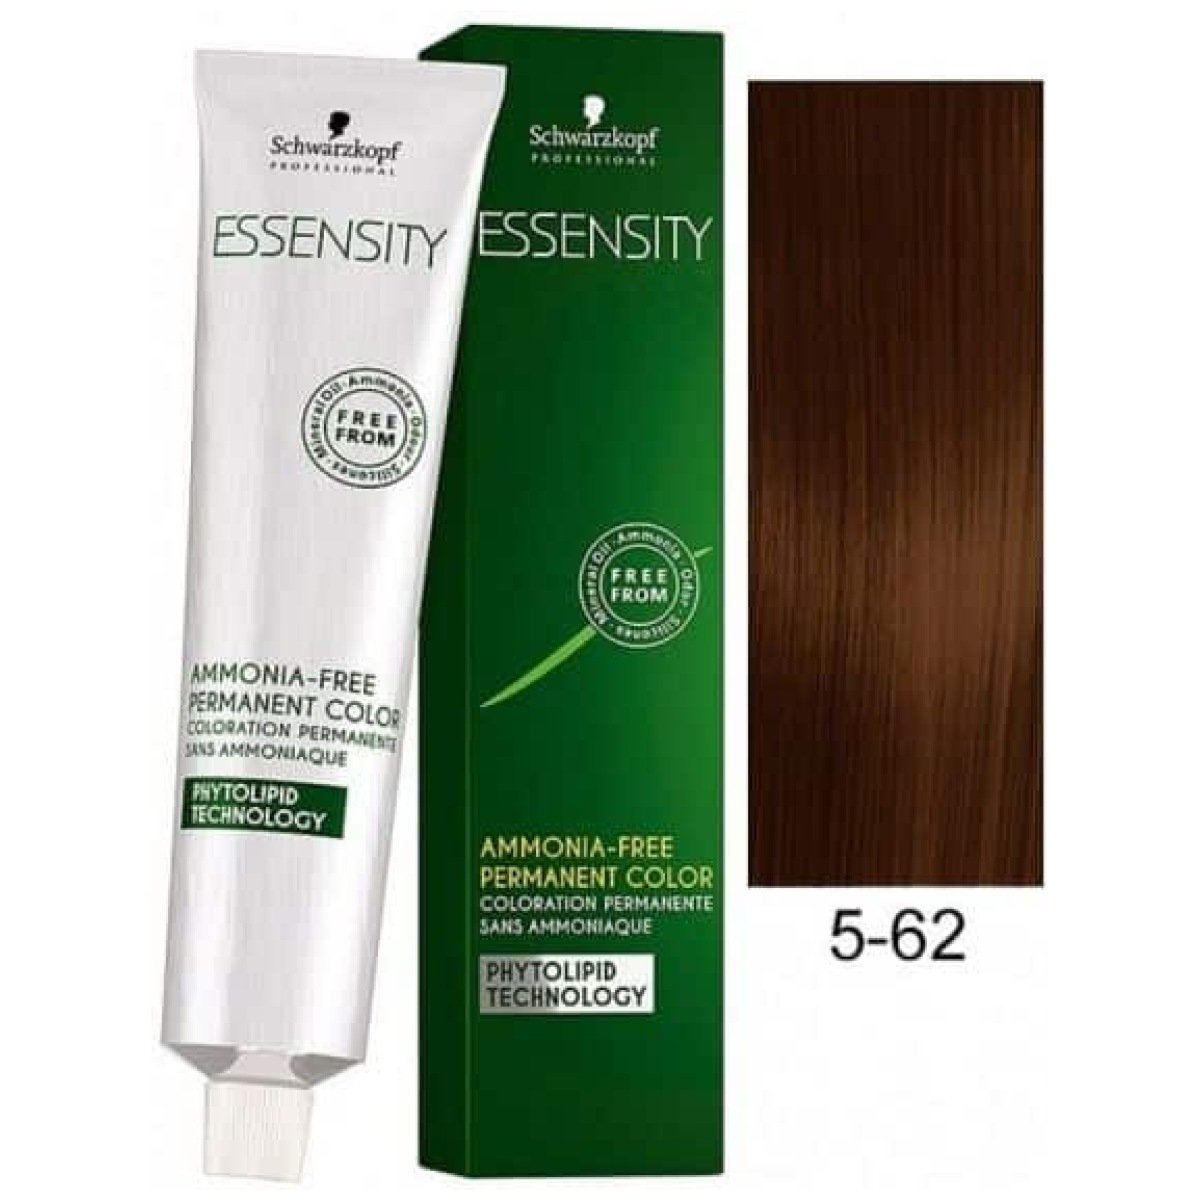 Schwarzkopf Essensity Ammonia Free Hair Color 5-62 Light Brown auburn Ash